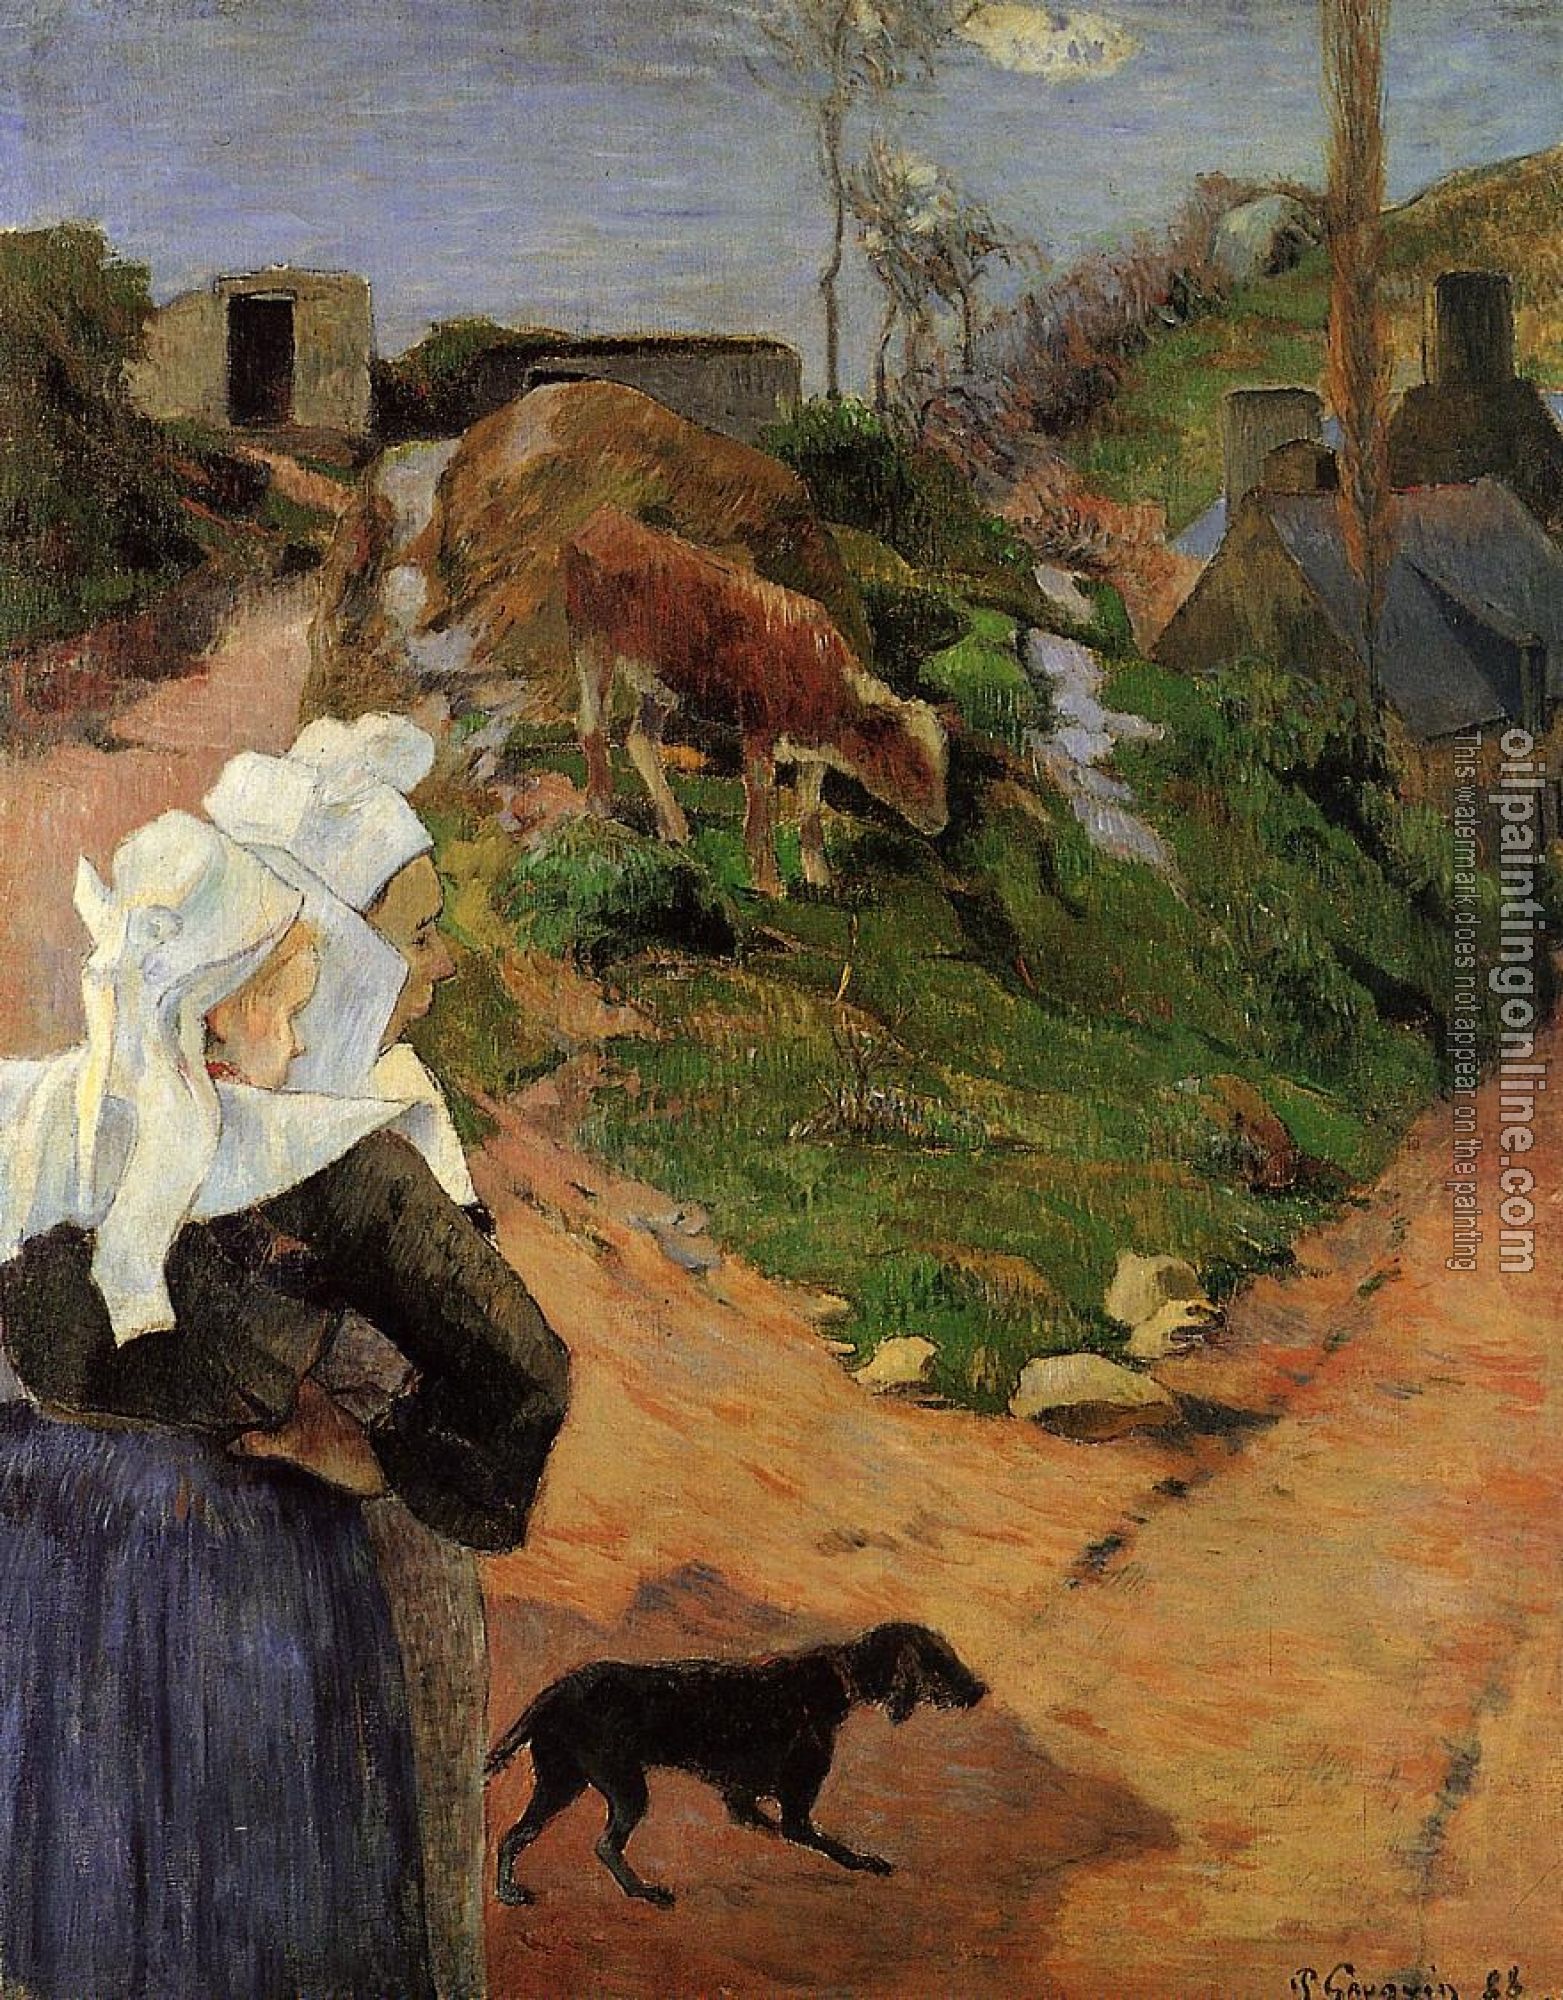 Gauguin, Paul - Breton Women at the Turn